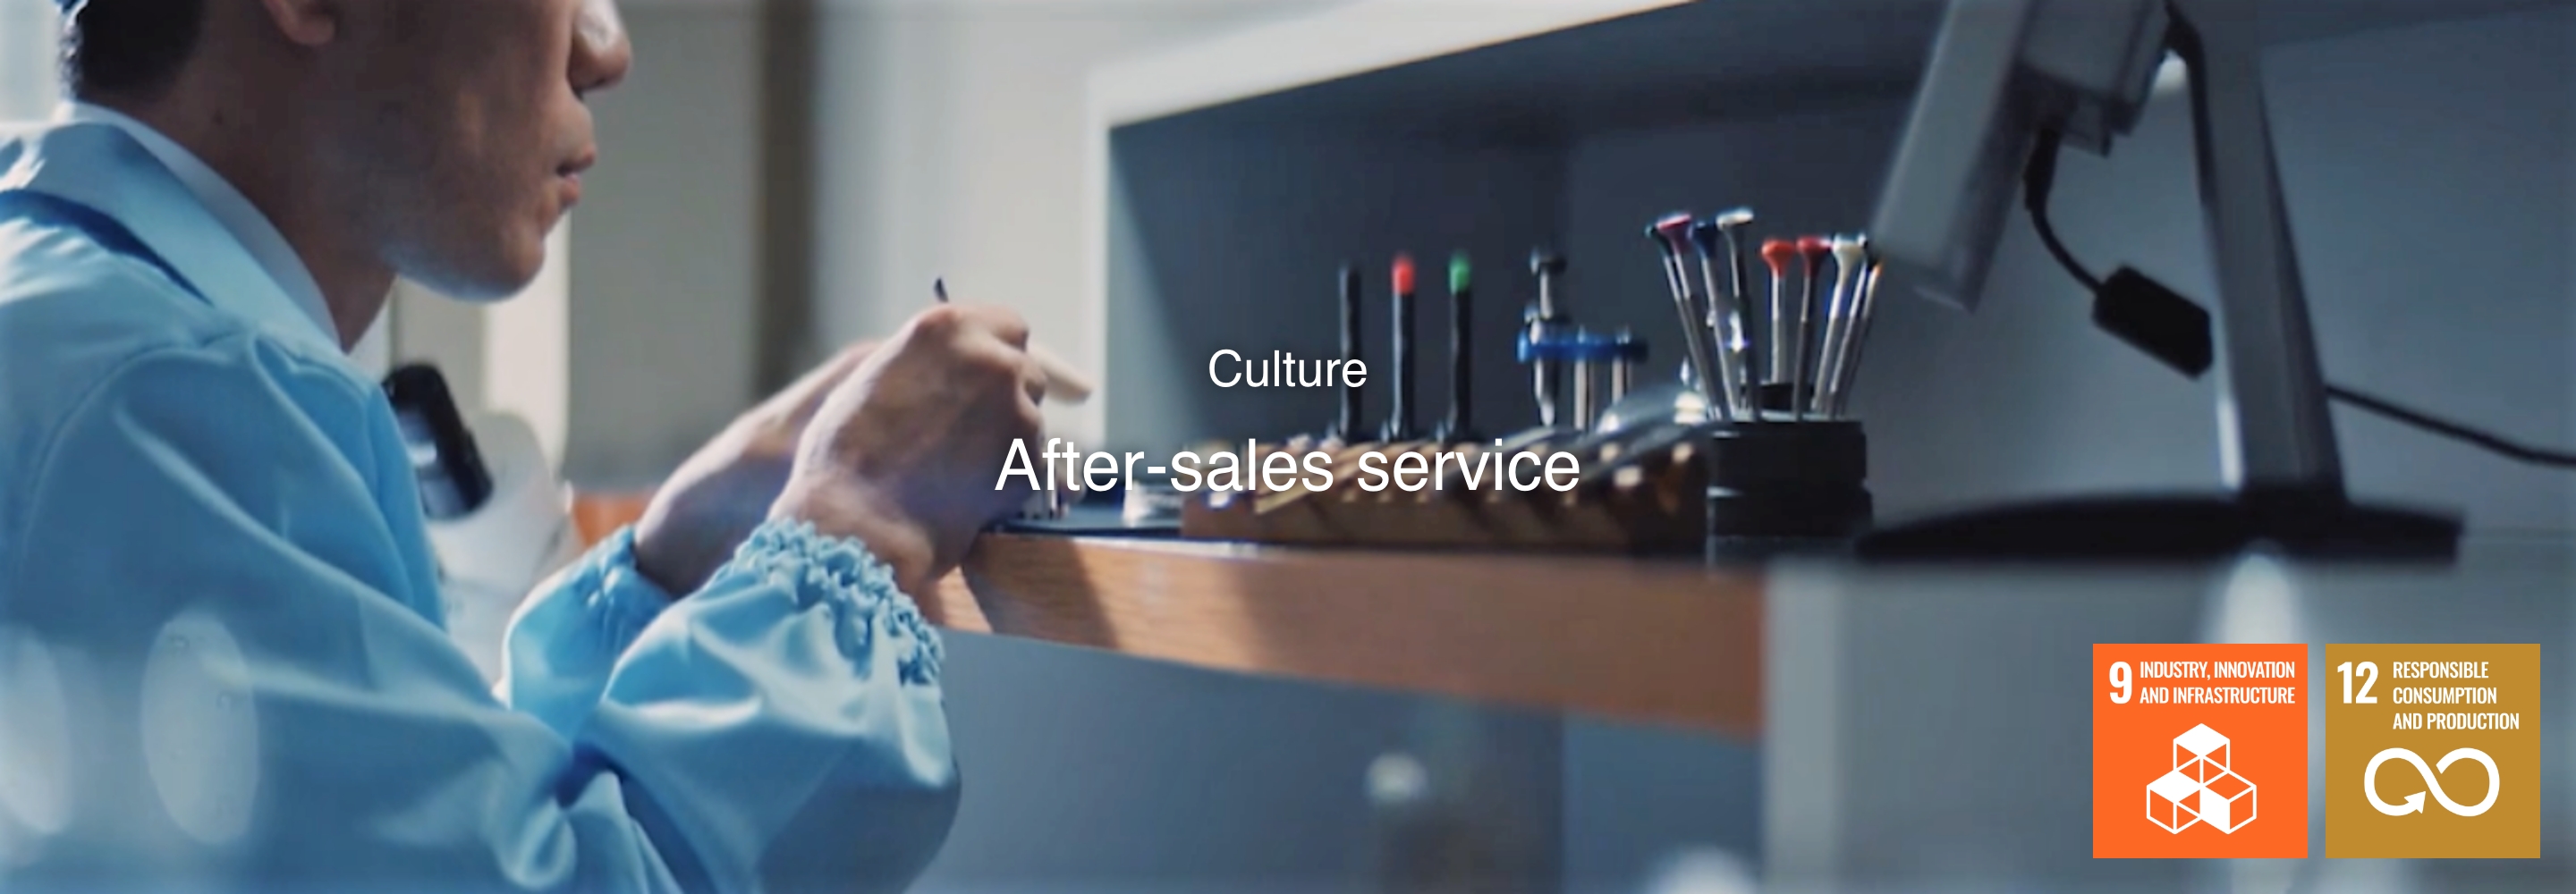 Culture After-sales service